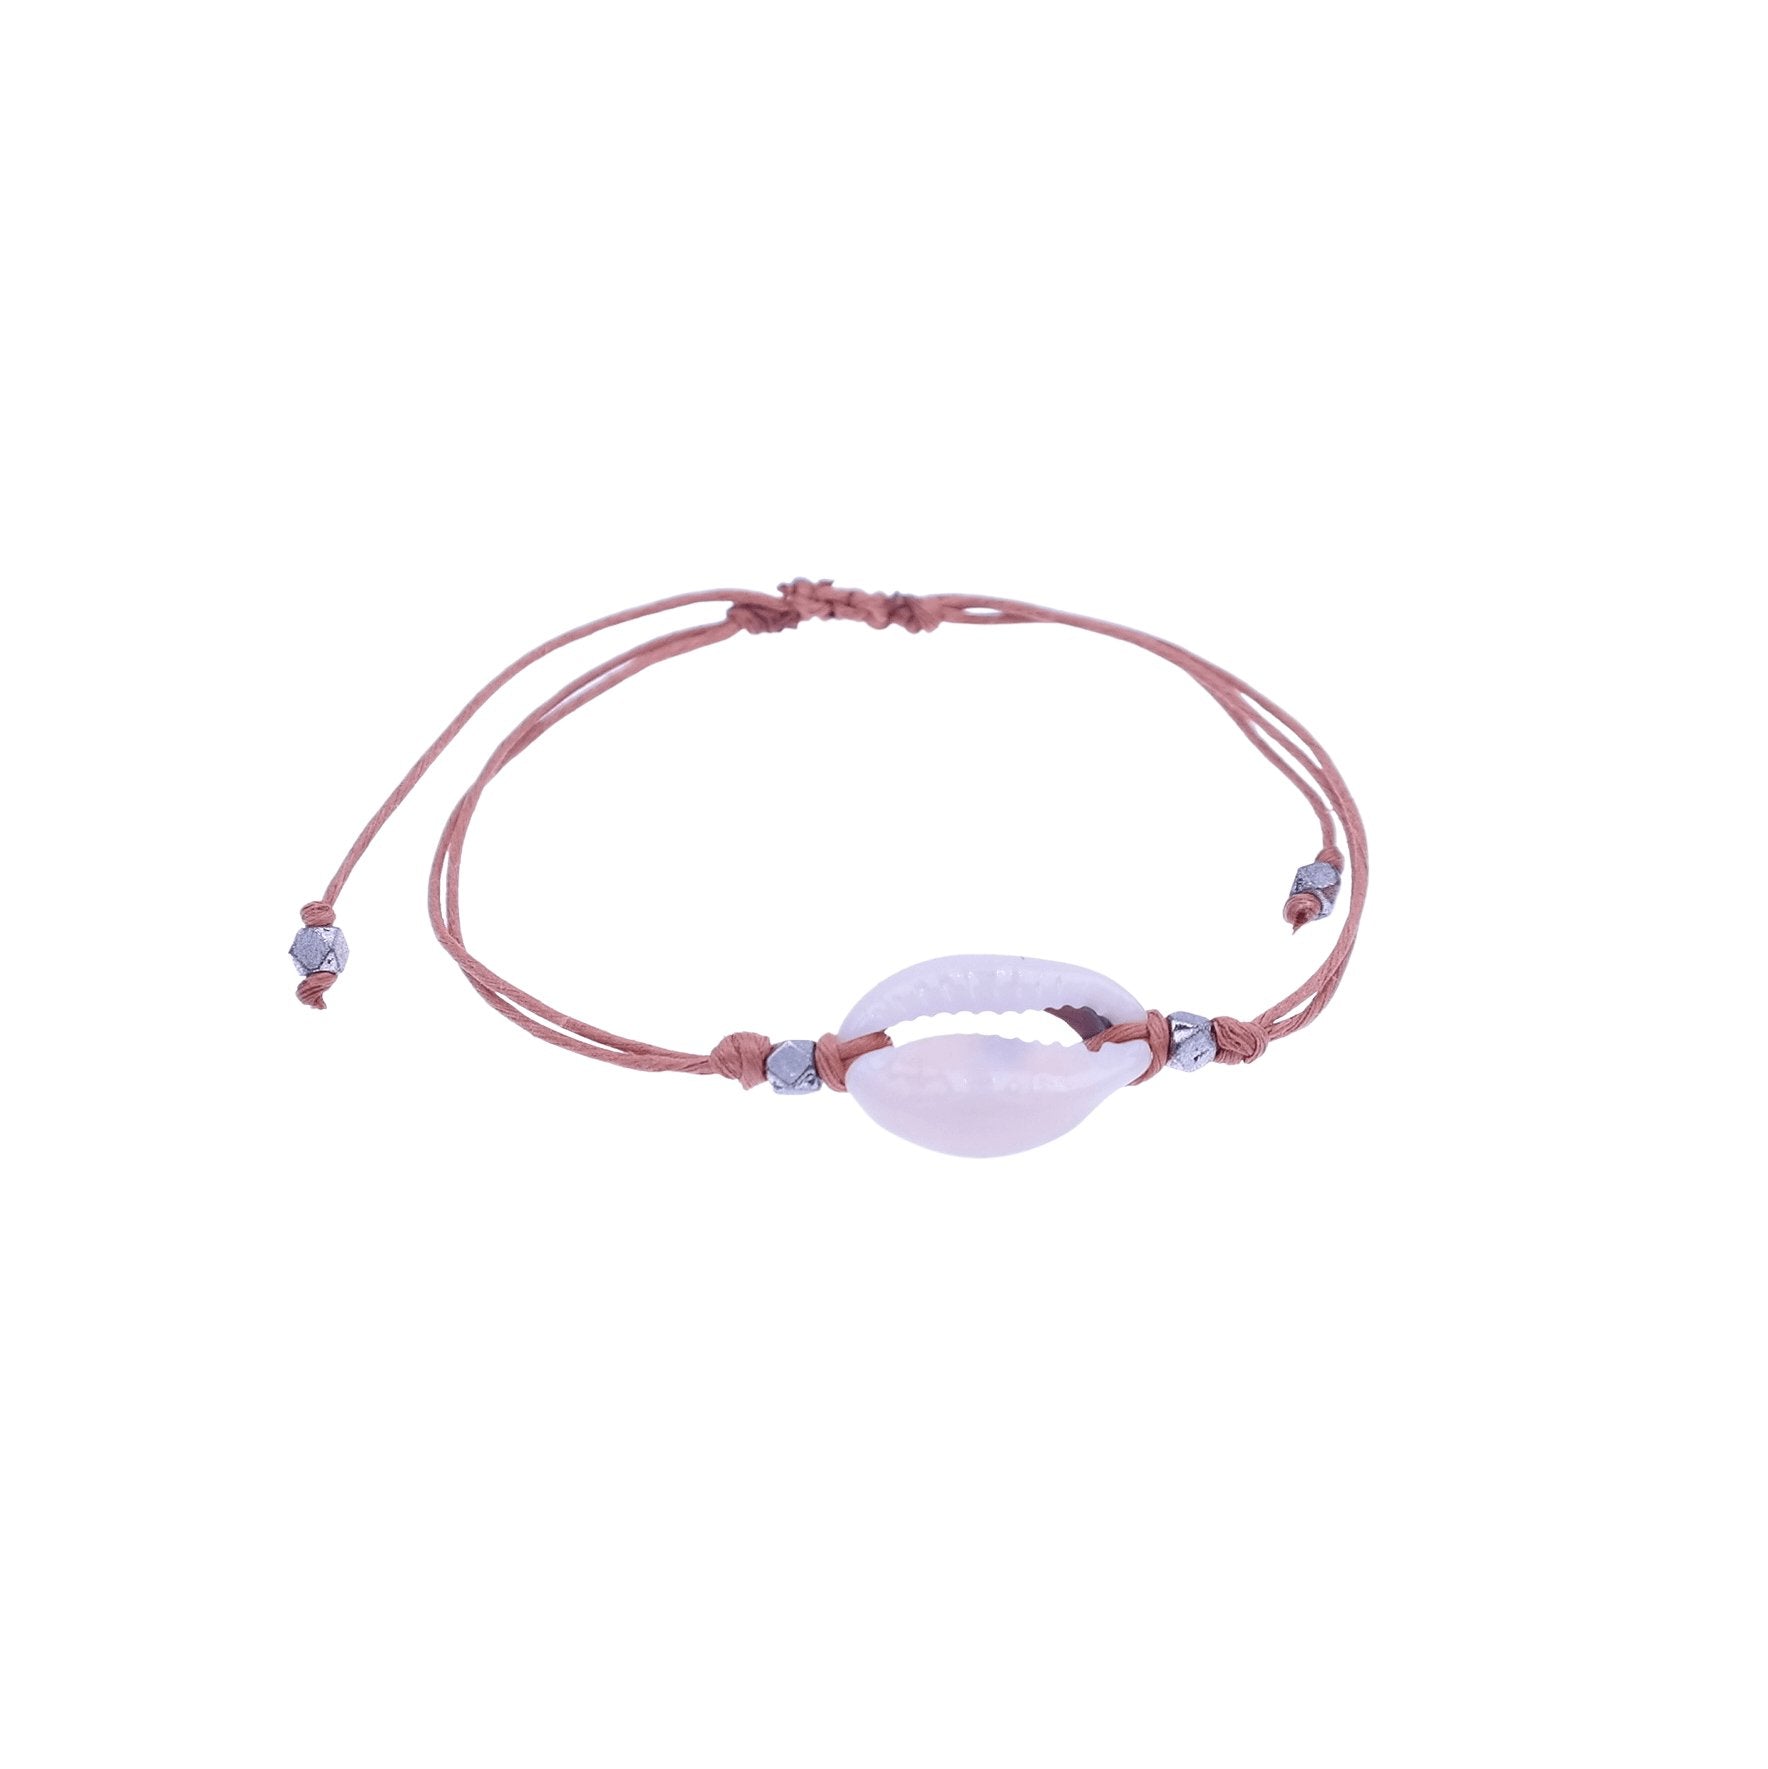 Cowrie Shell Beach Bracelet - Maui Bracelet - Gypsy Soul Jewellery